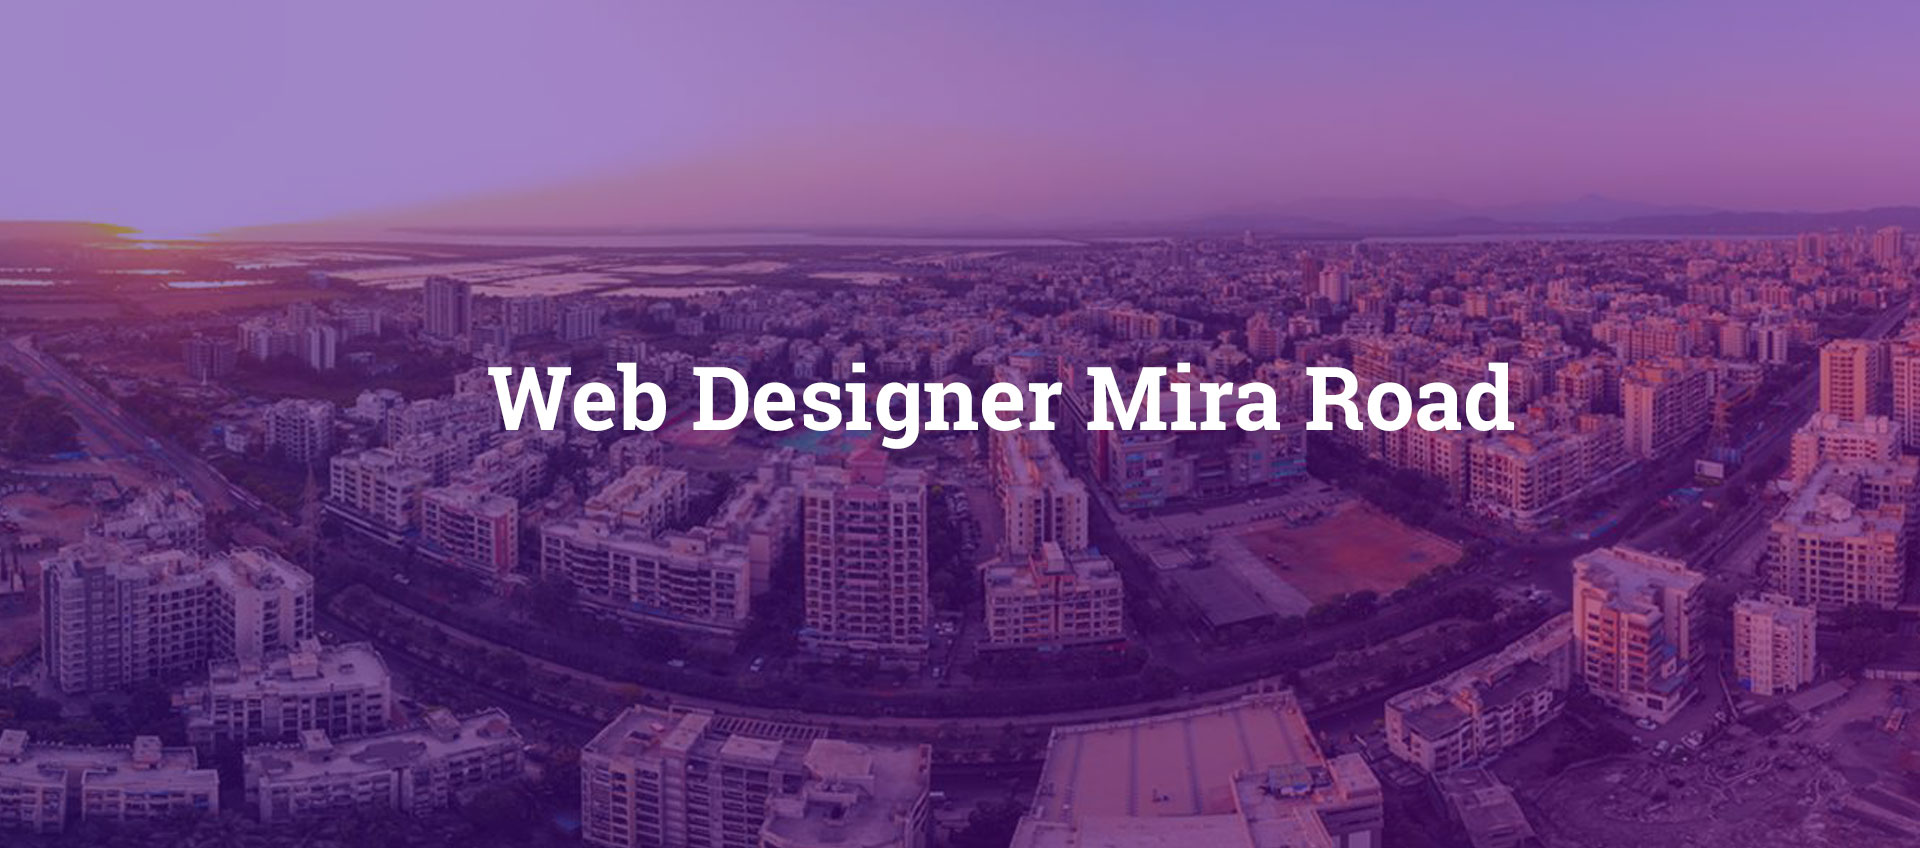 web designer mira road - e2s infotech